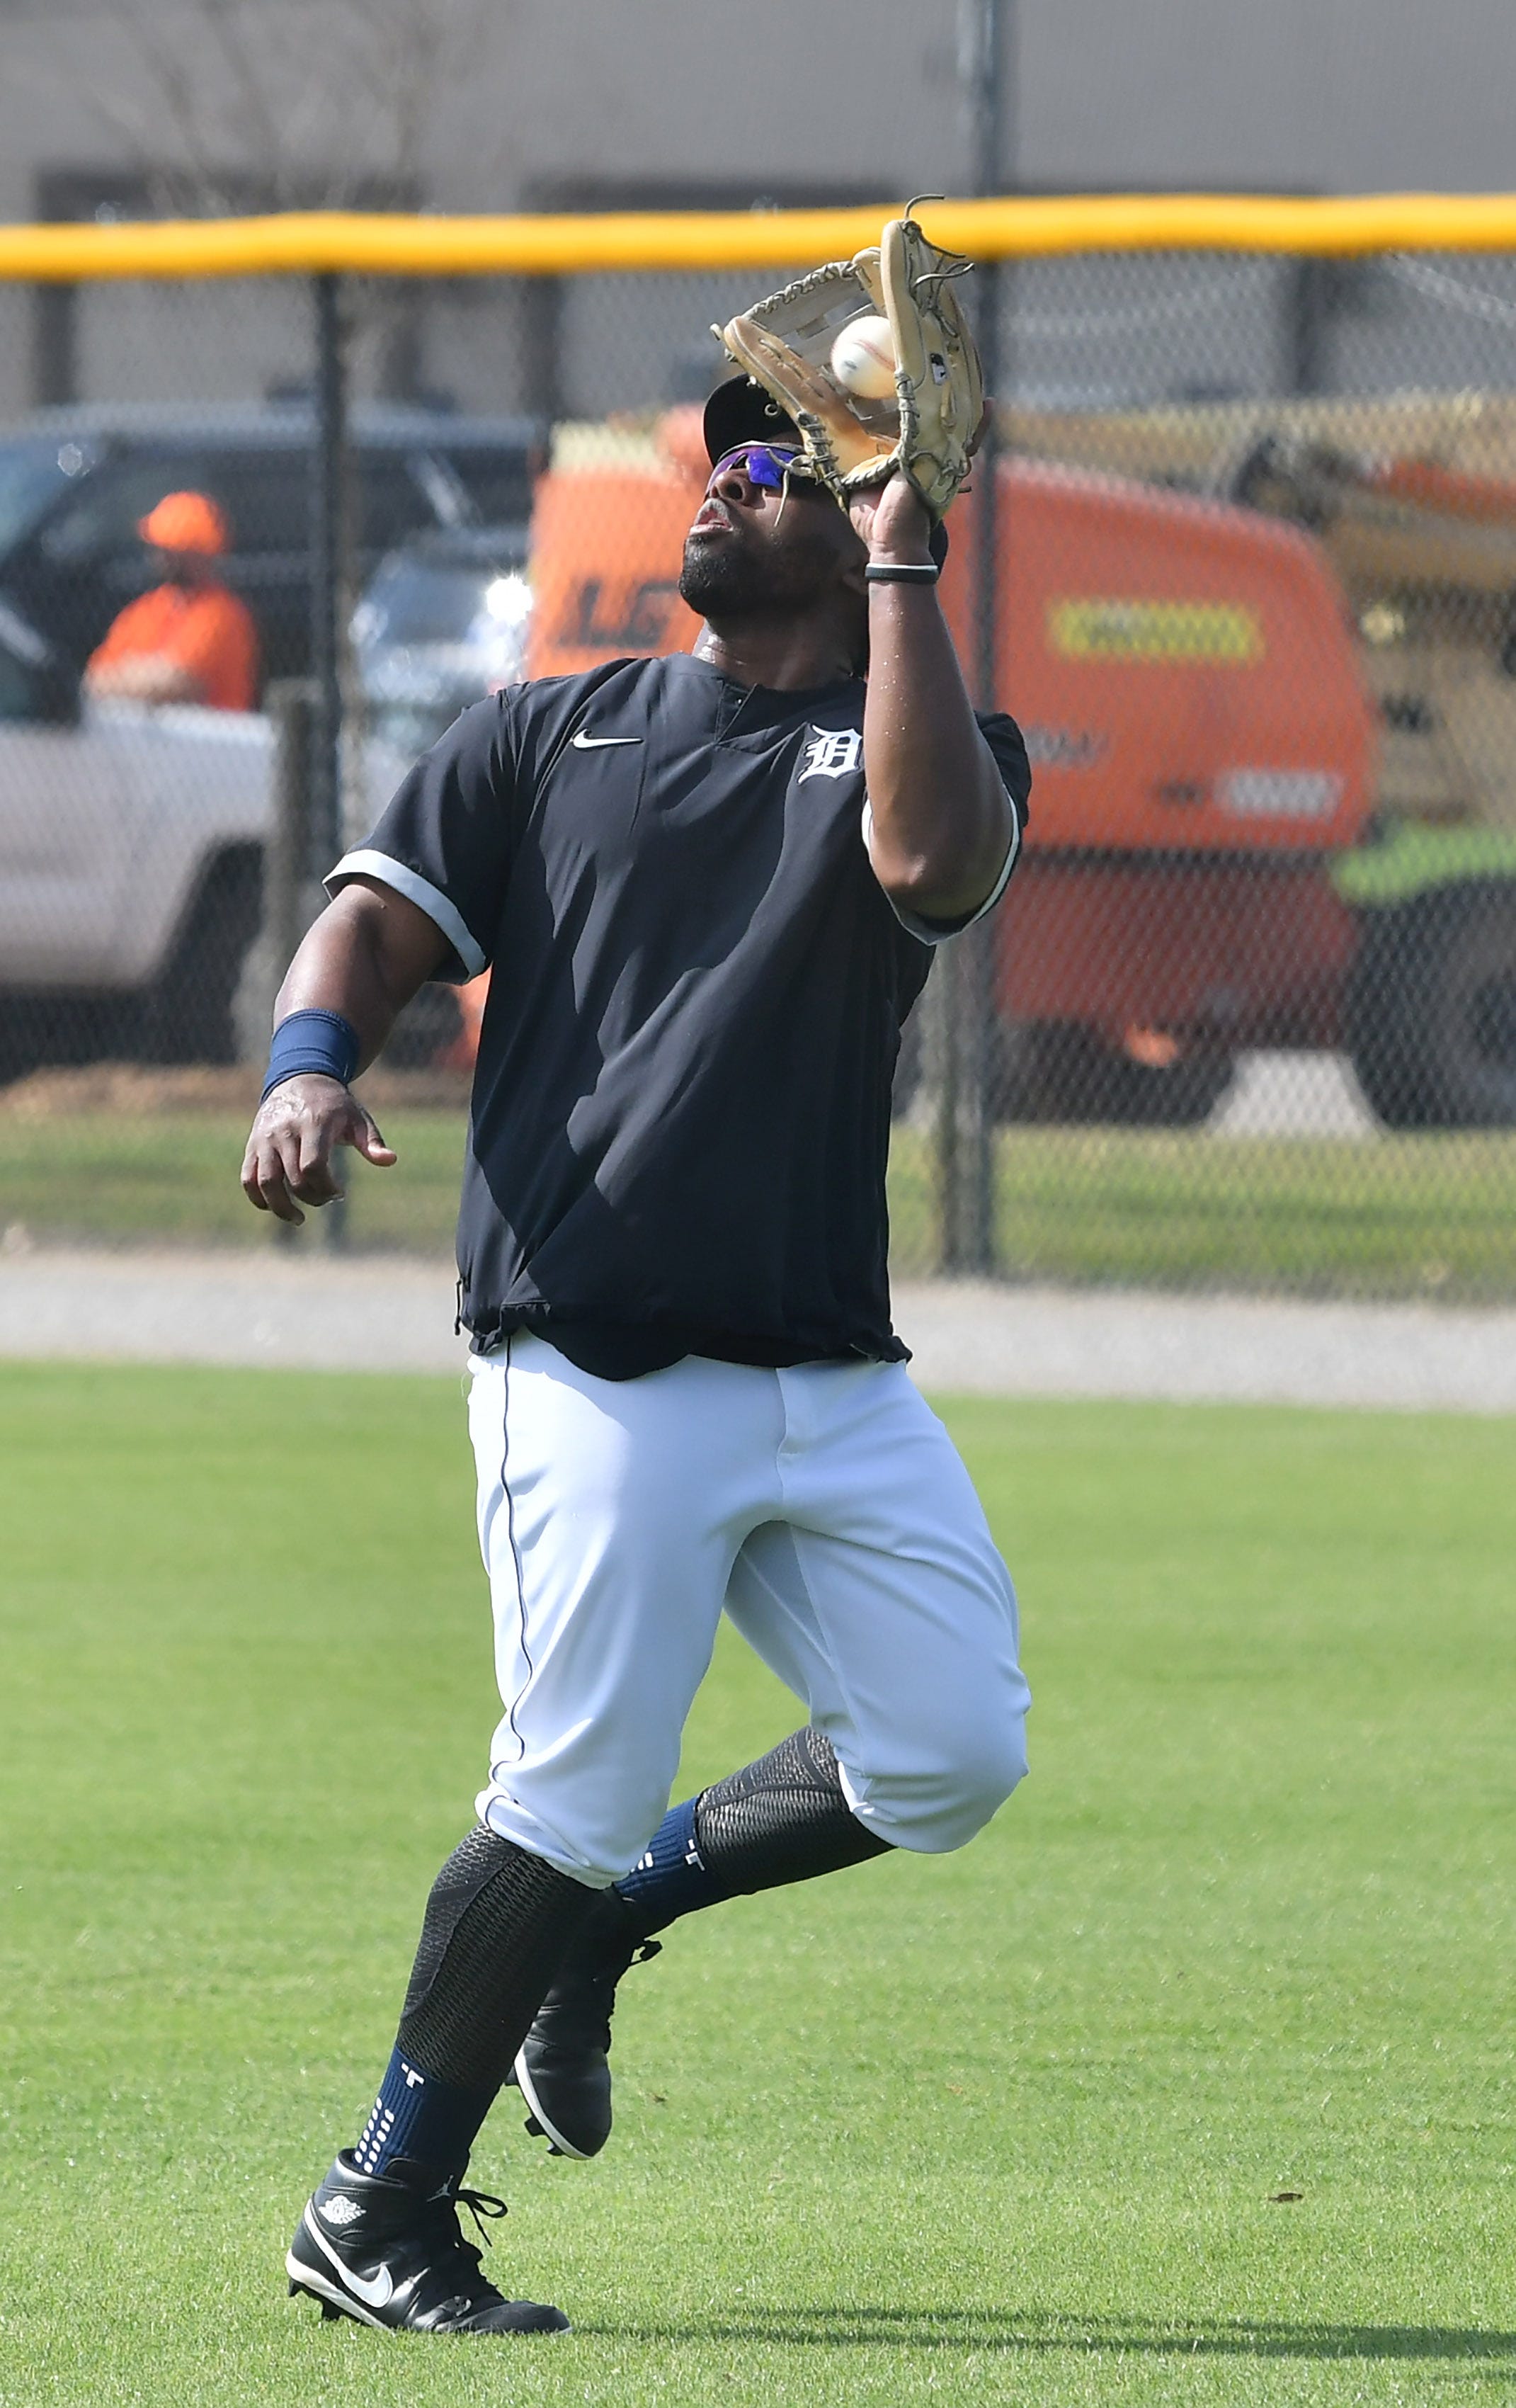 Tigers outfielder Christin Stewart makes a running catch.